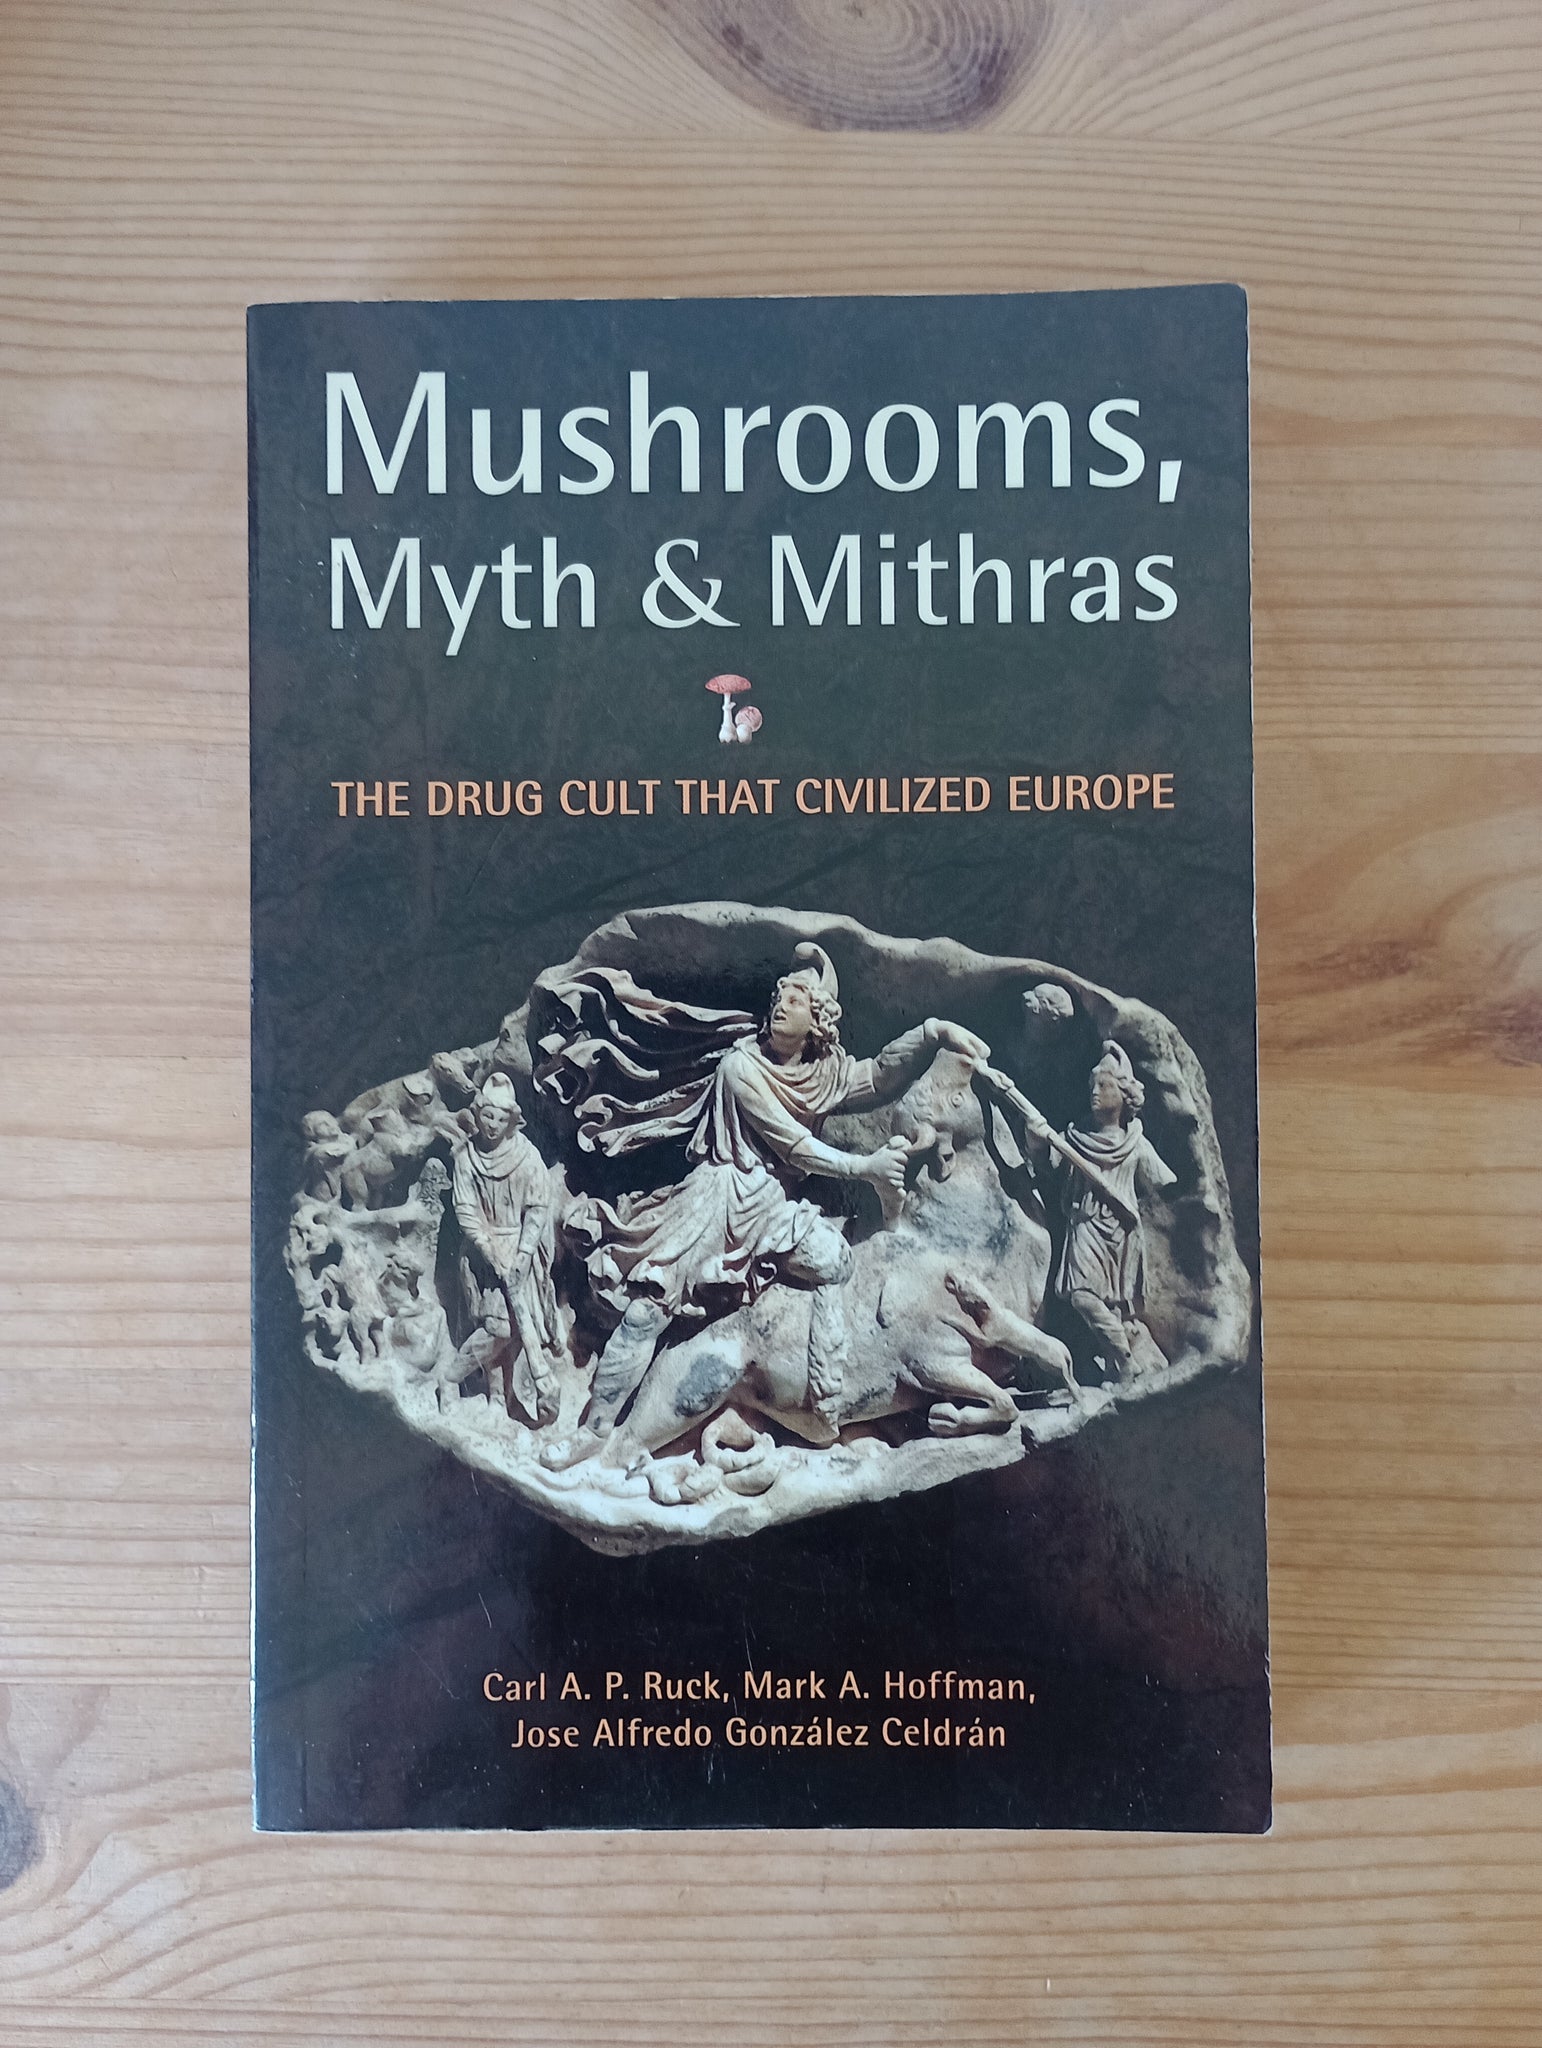 Mushrooms, Myth & Mithras (2011) by Carl Ruck, Mark Hoffman and Jose Celdran